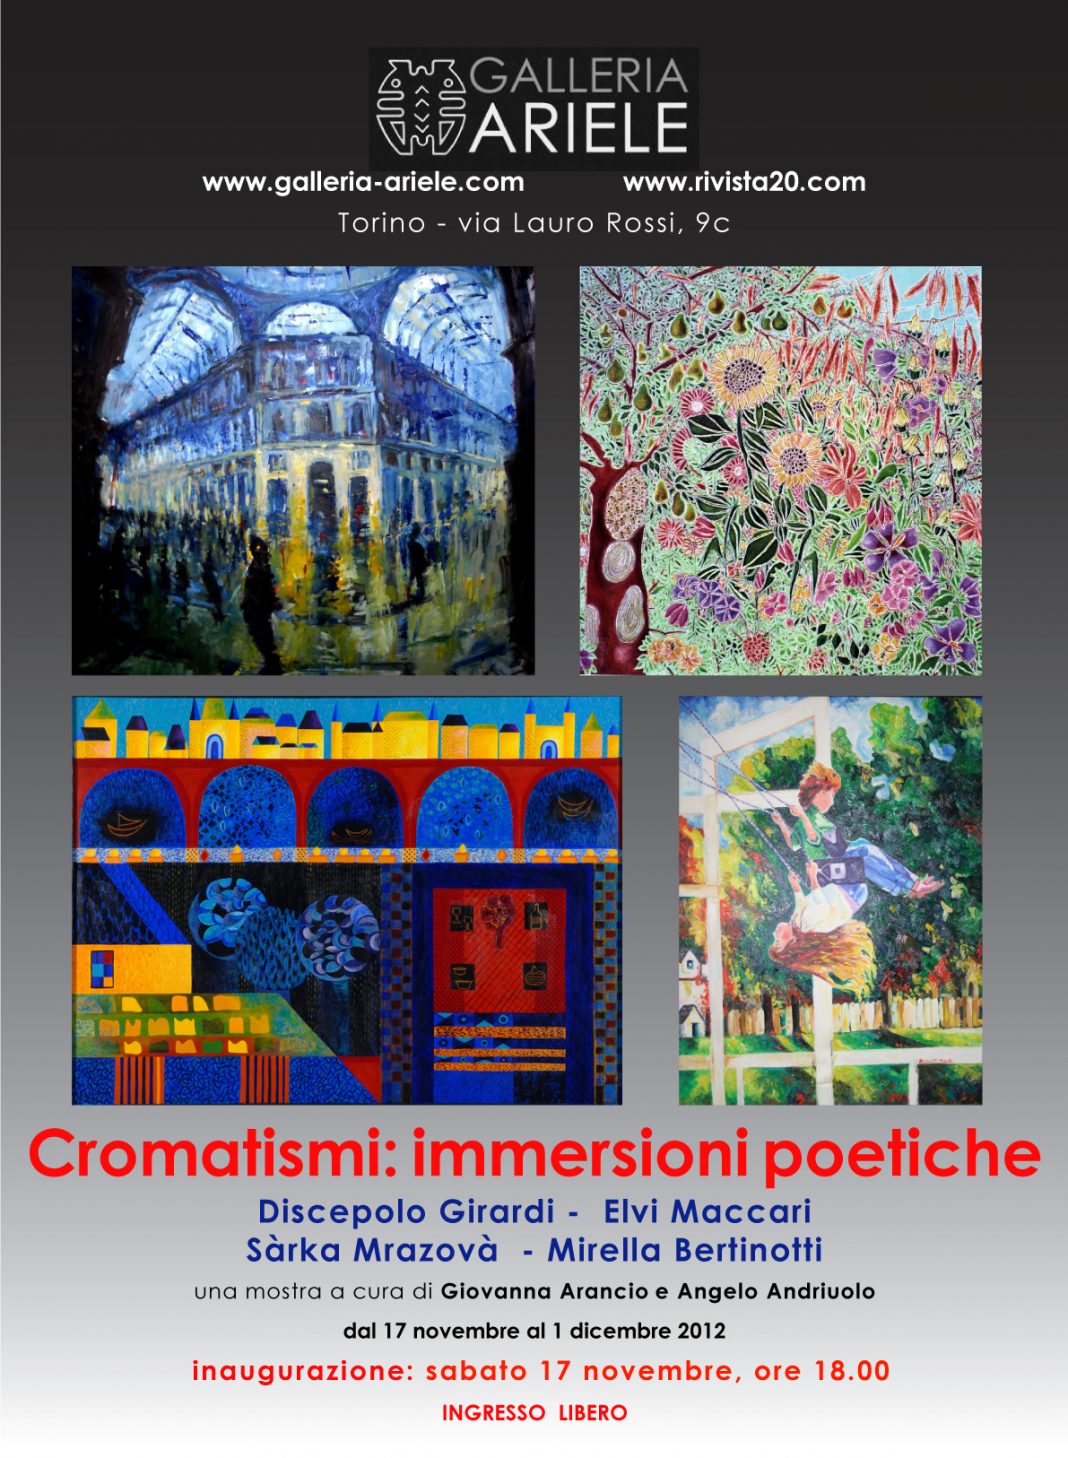 Cromatismi. Immersioni poetichehttps://www.exibart.com/repository/media/eventi/2012/11/cromatismi.-immersioni-poetiche-1068x1458.jpg